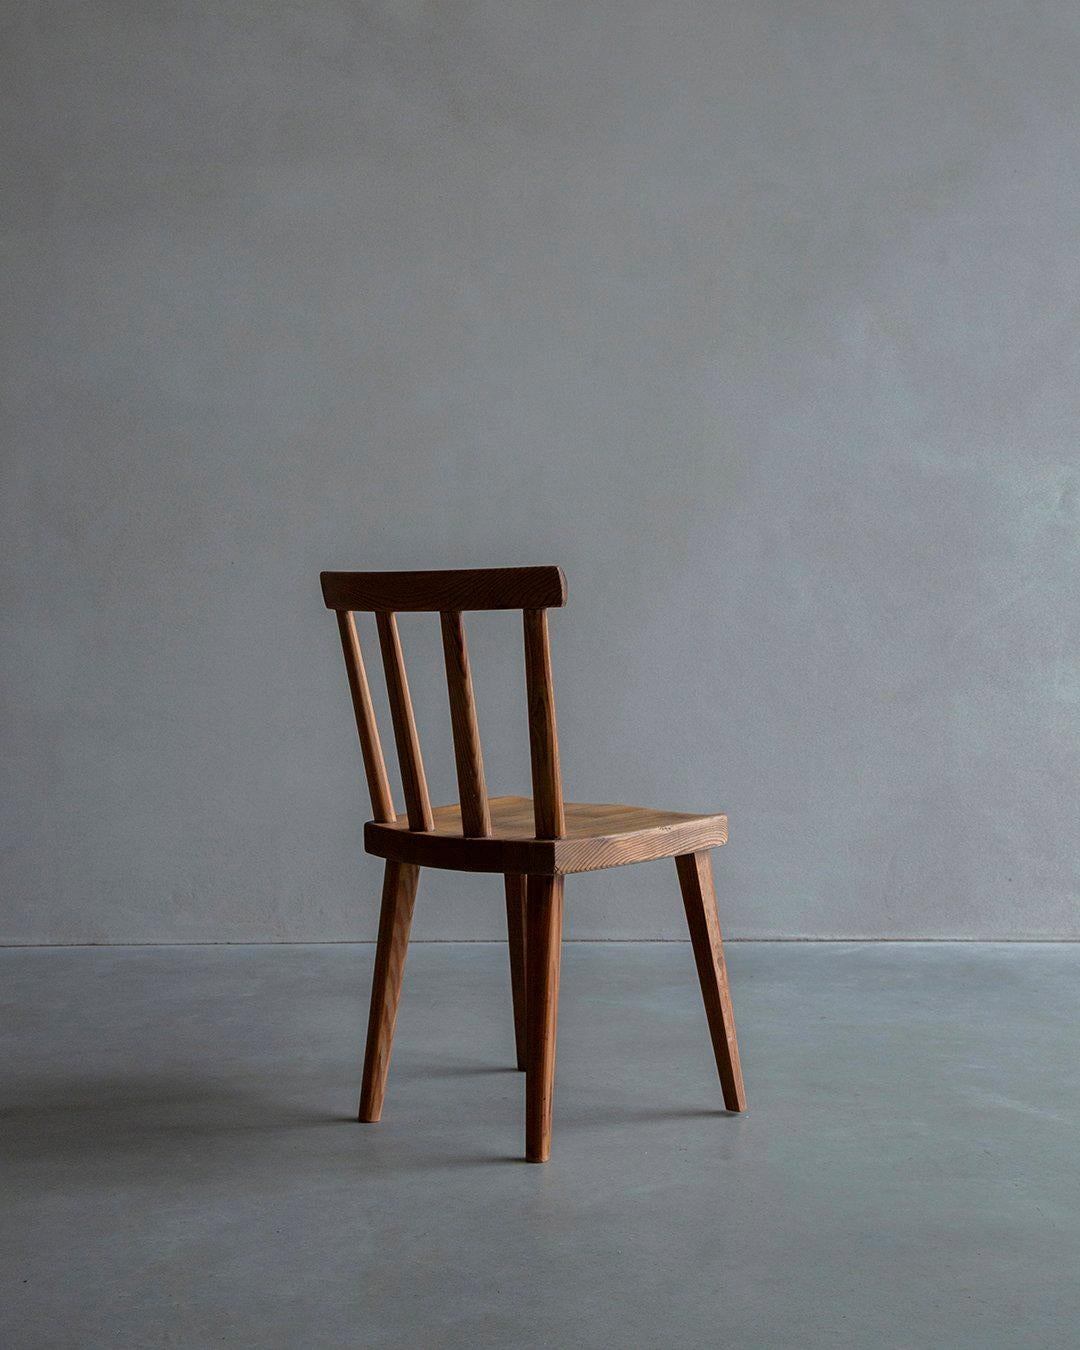 Fait main Axel Einar Hjorth - Utö Dining Chair - produit par Nordiska Kompaniet en Suède en vente